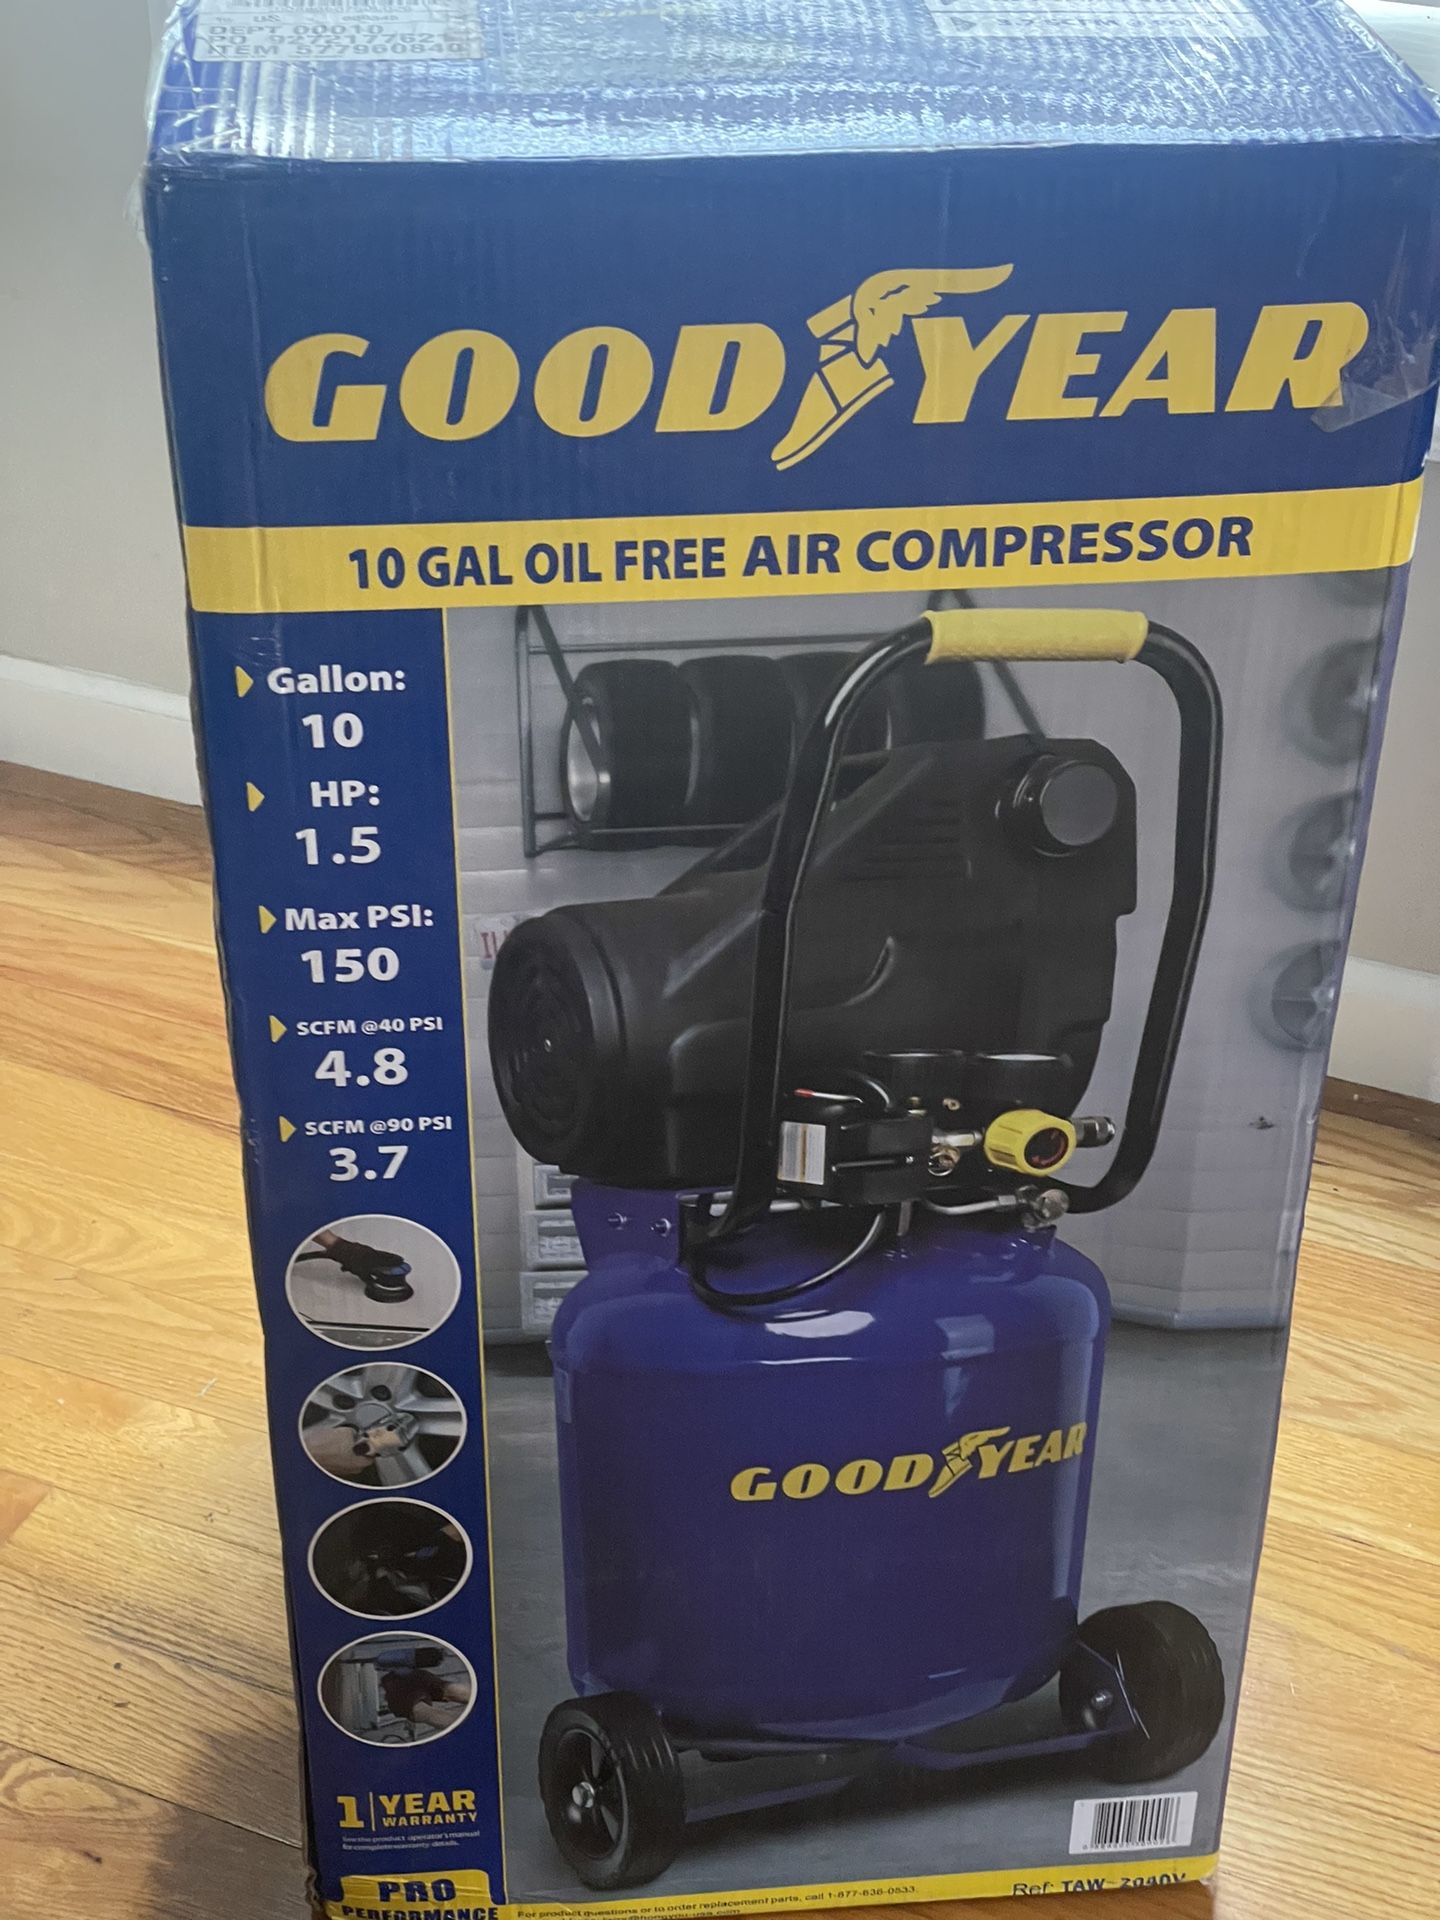 Brand New! 10 Gal Oil Free Air Compressor